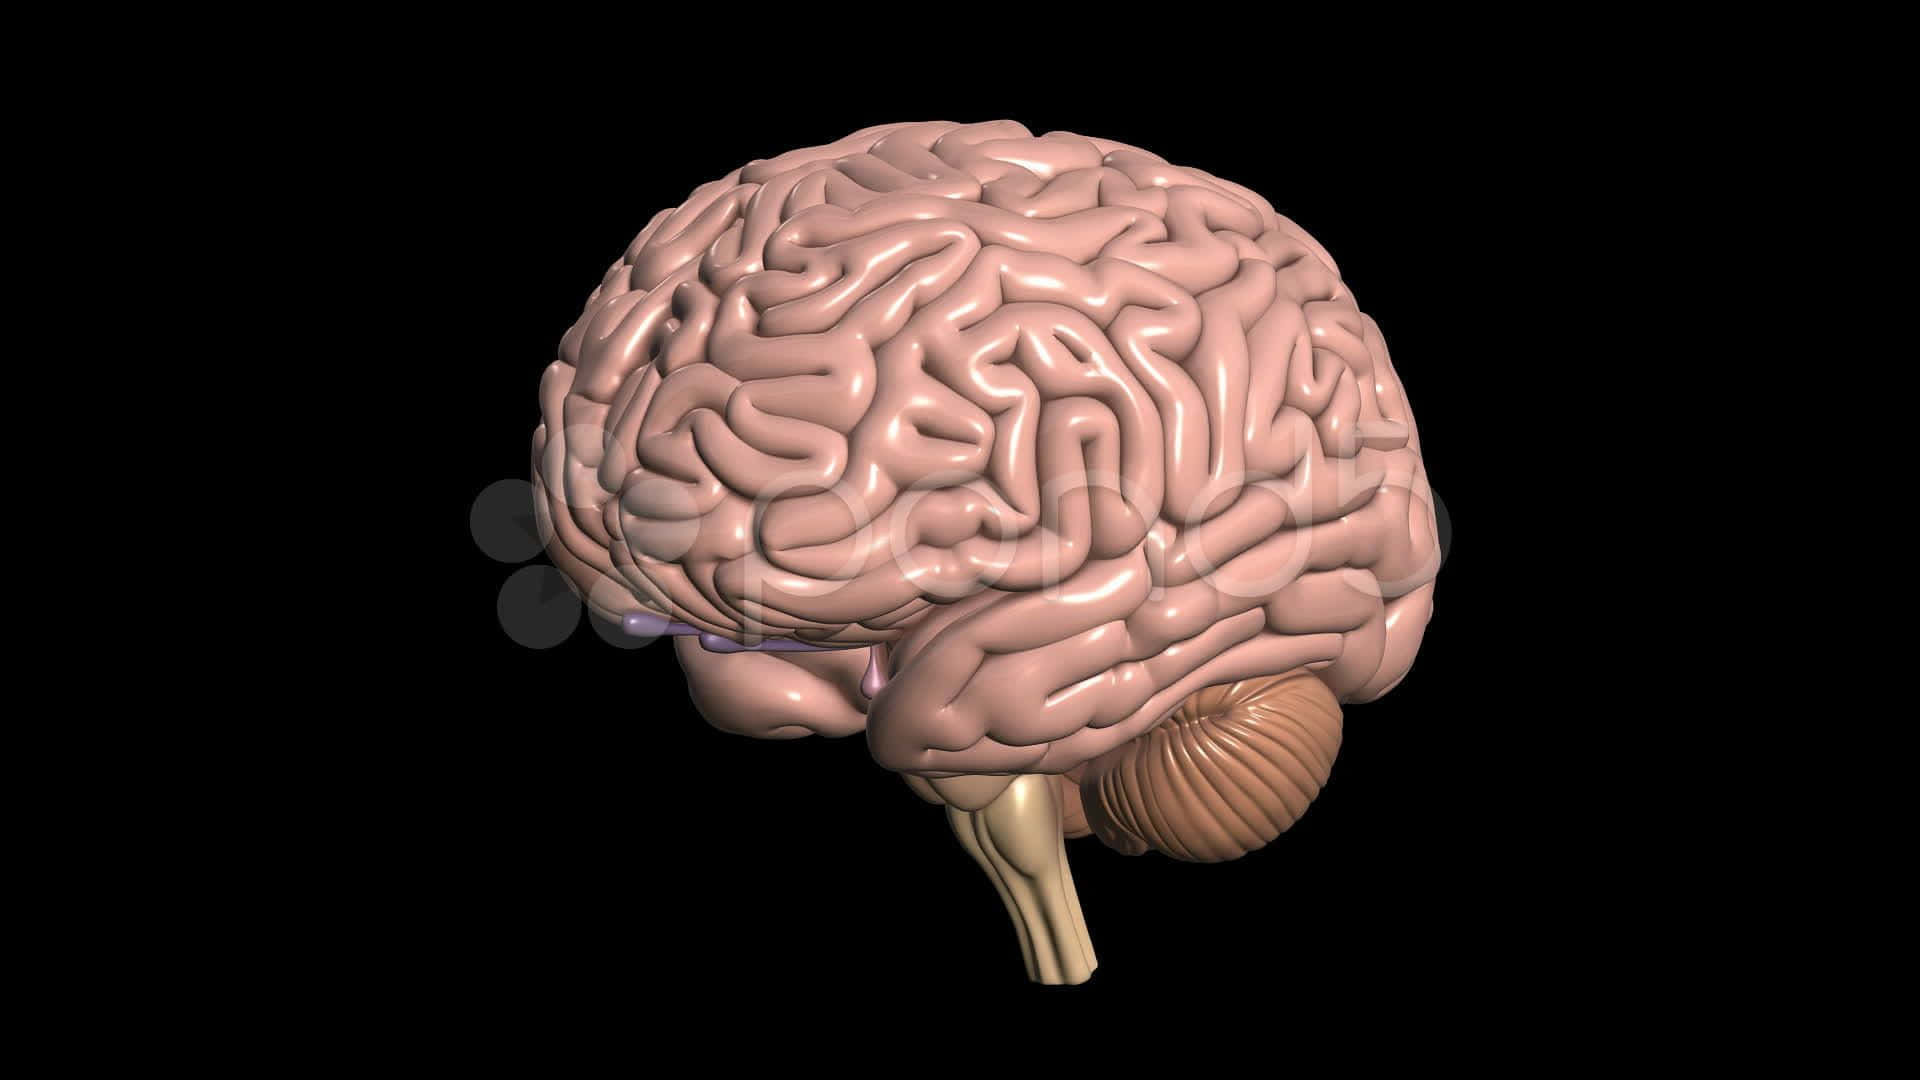 3d Model Of Human Brain Background